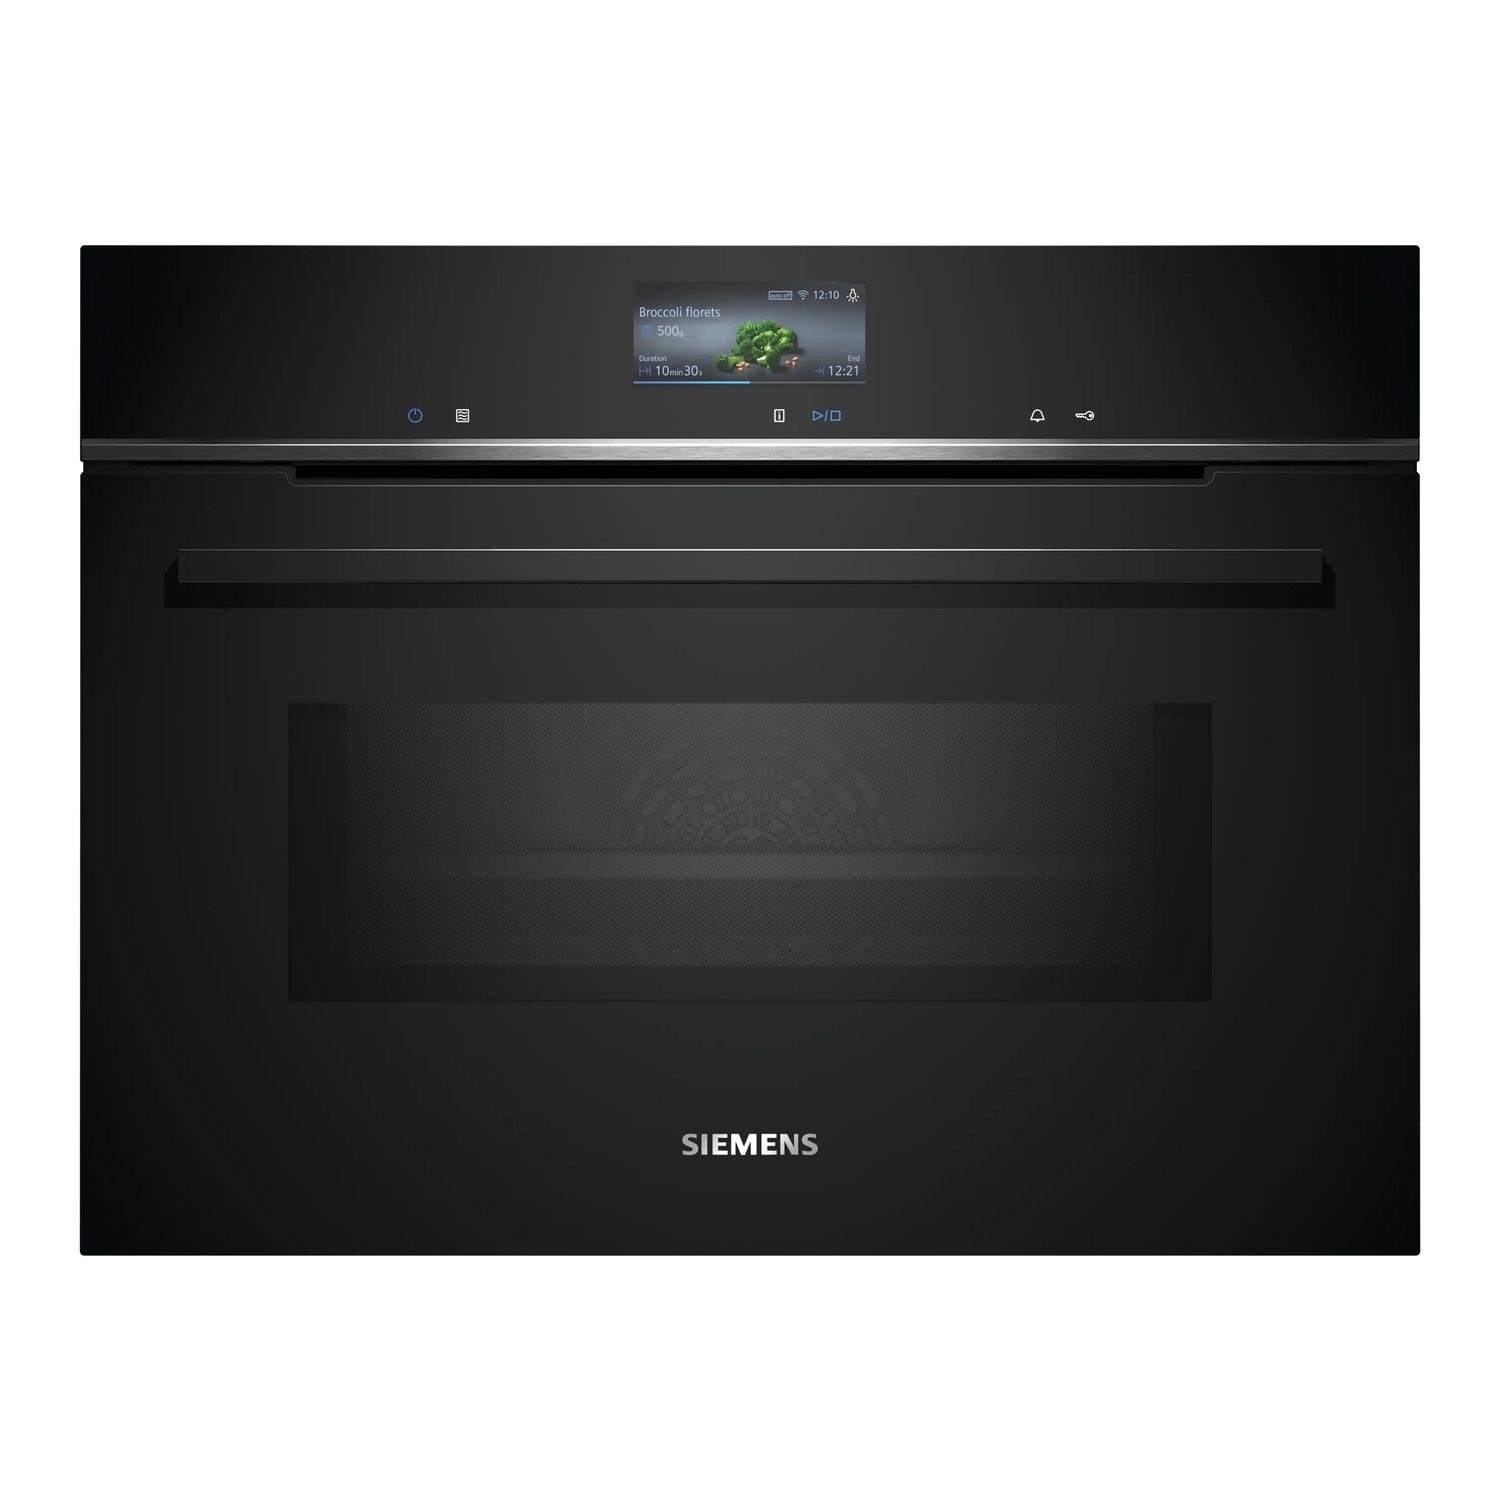 Photos - Oven Siemens iQ700 Built-In Combination Microwave  - Black CM776G1B1B 